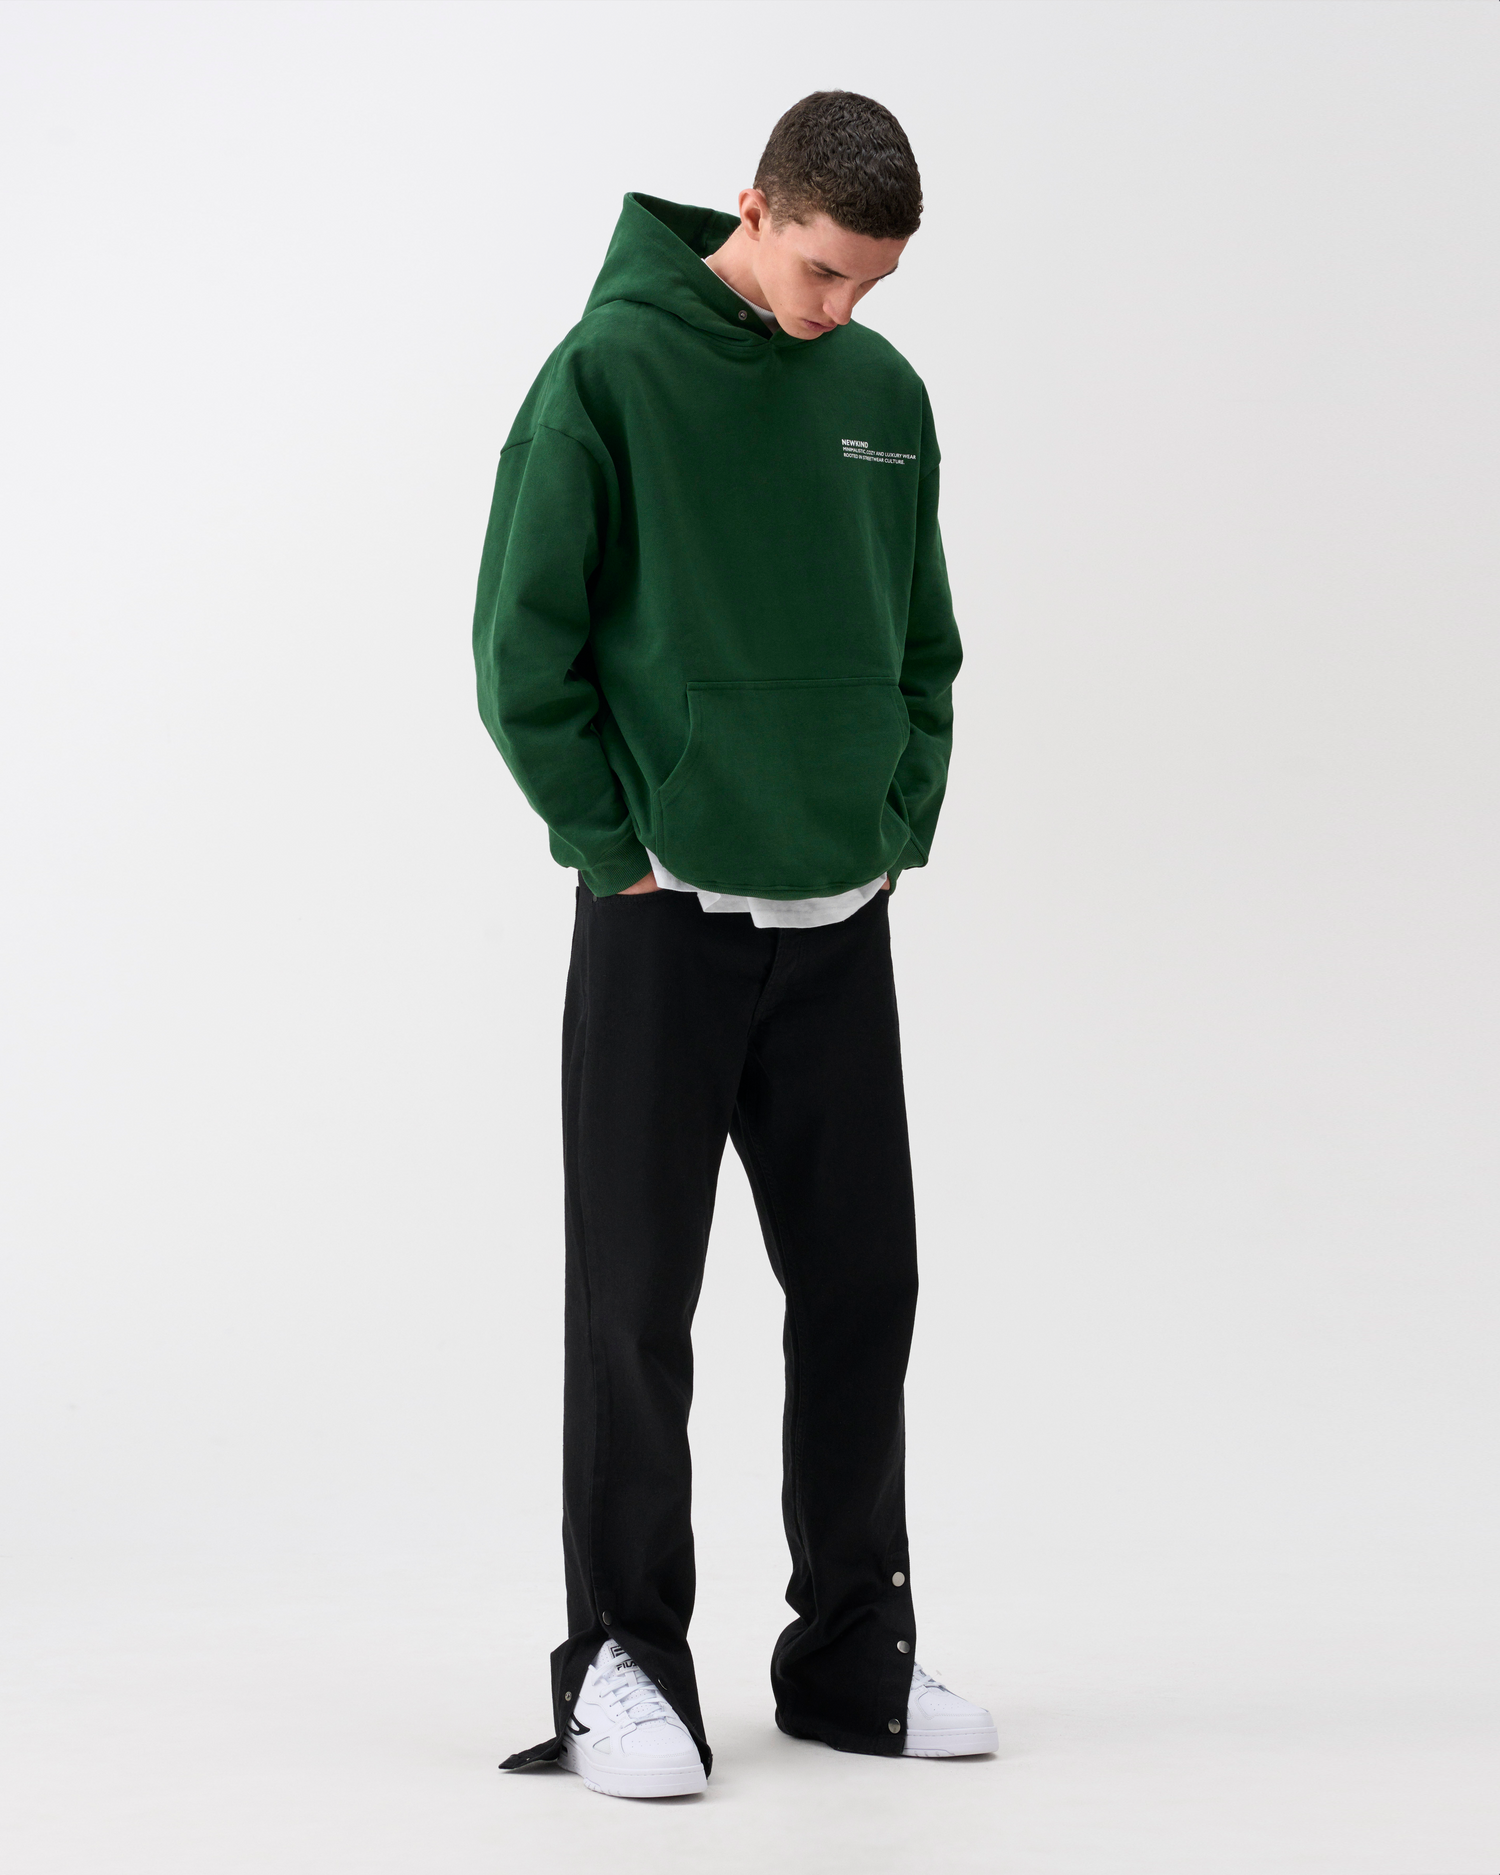 Forest green hoodie / Brand lookbook